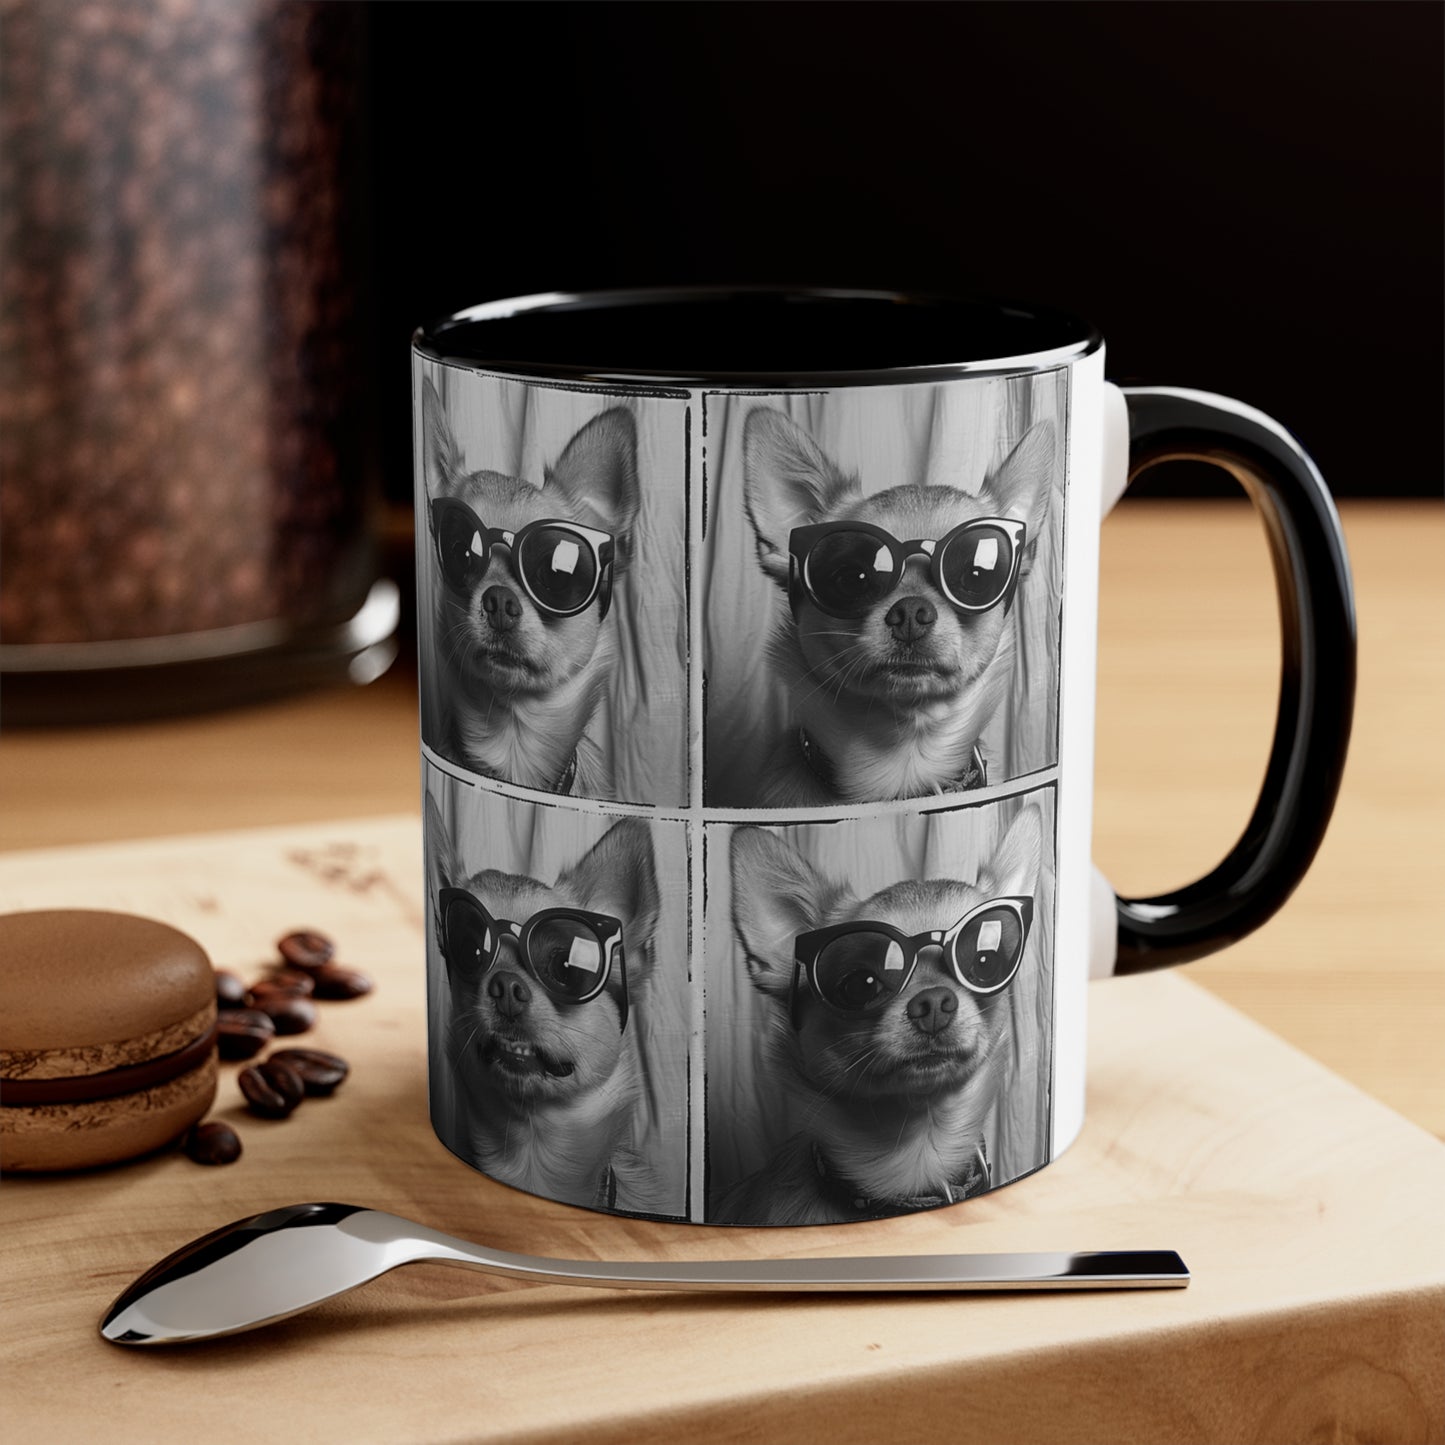 Chihuahua Photo Booth Accent Coffee Mug, 11oz